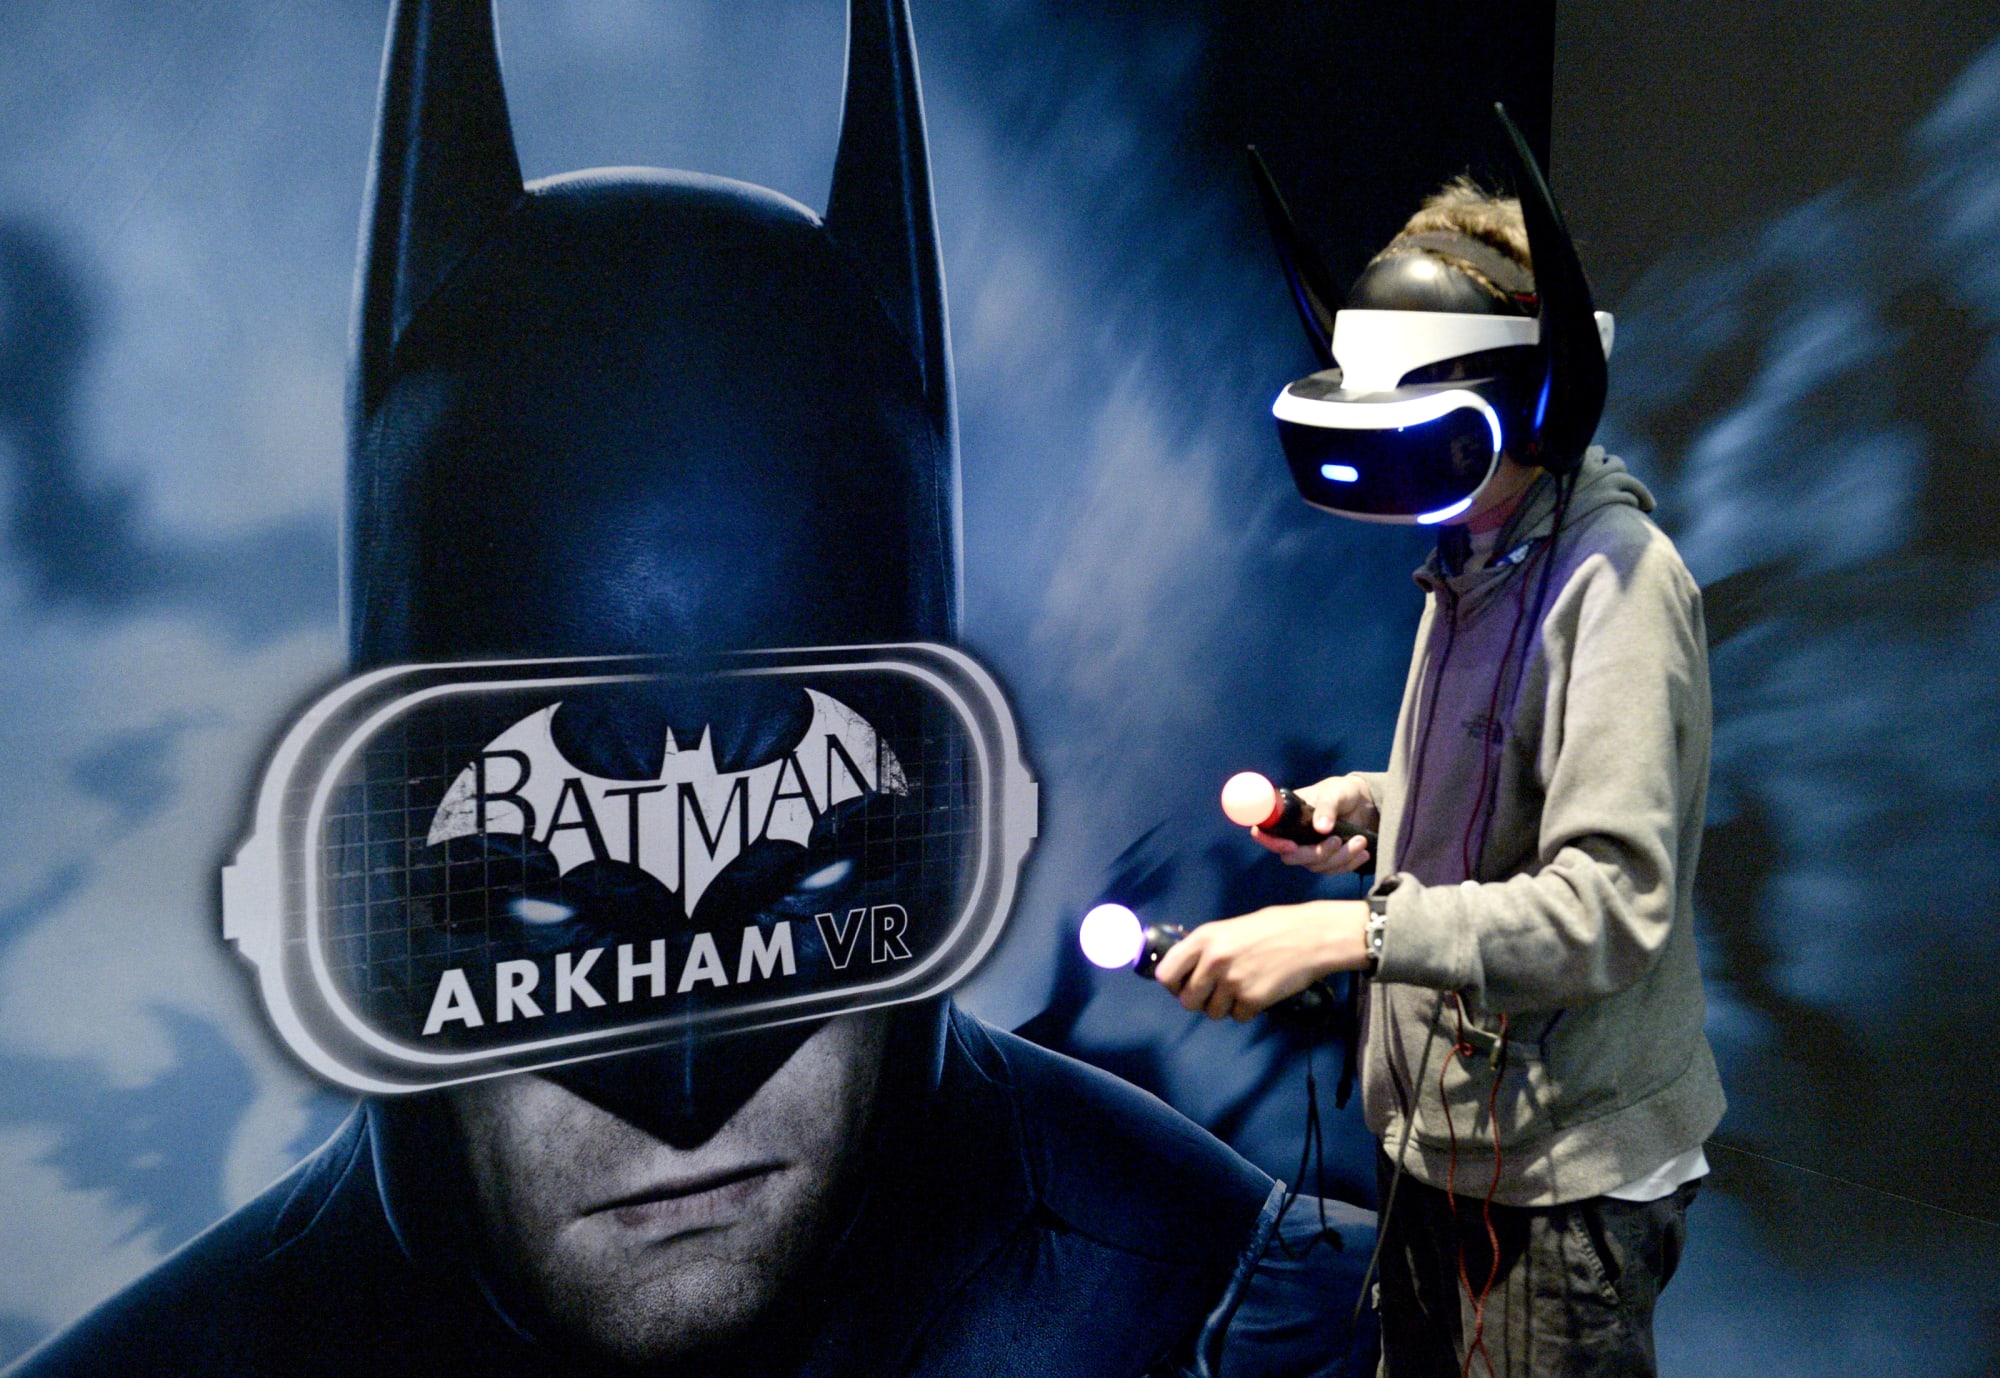 Rumor: Another 'Batman: Arkham' game is in development